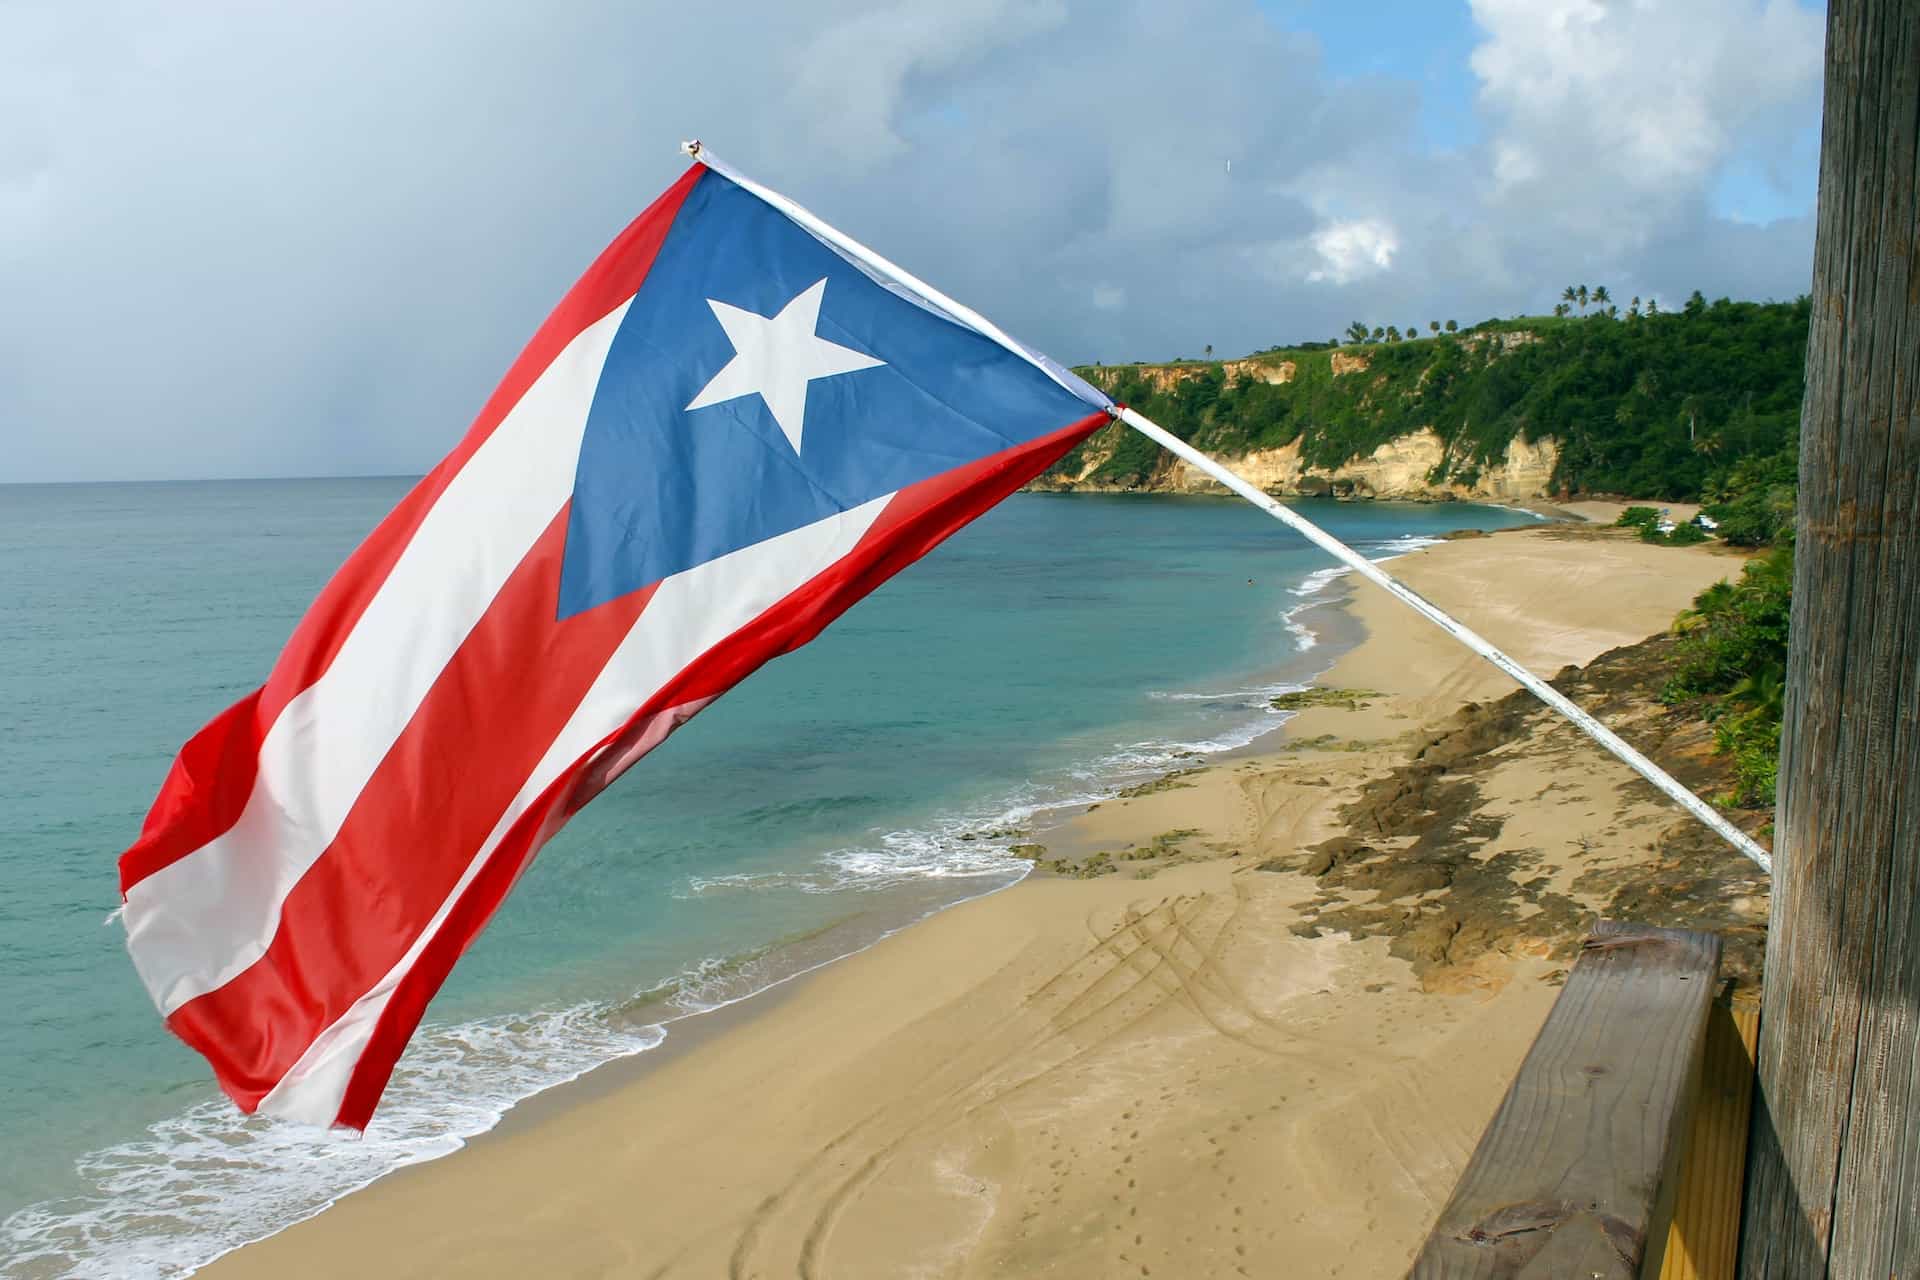 Bendera Puerto Rico berkibar di atas pantai berpasir, dengan tebing yang tertutup pepohonan dan samudra biru terbentang di belakangnya.